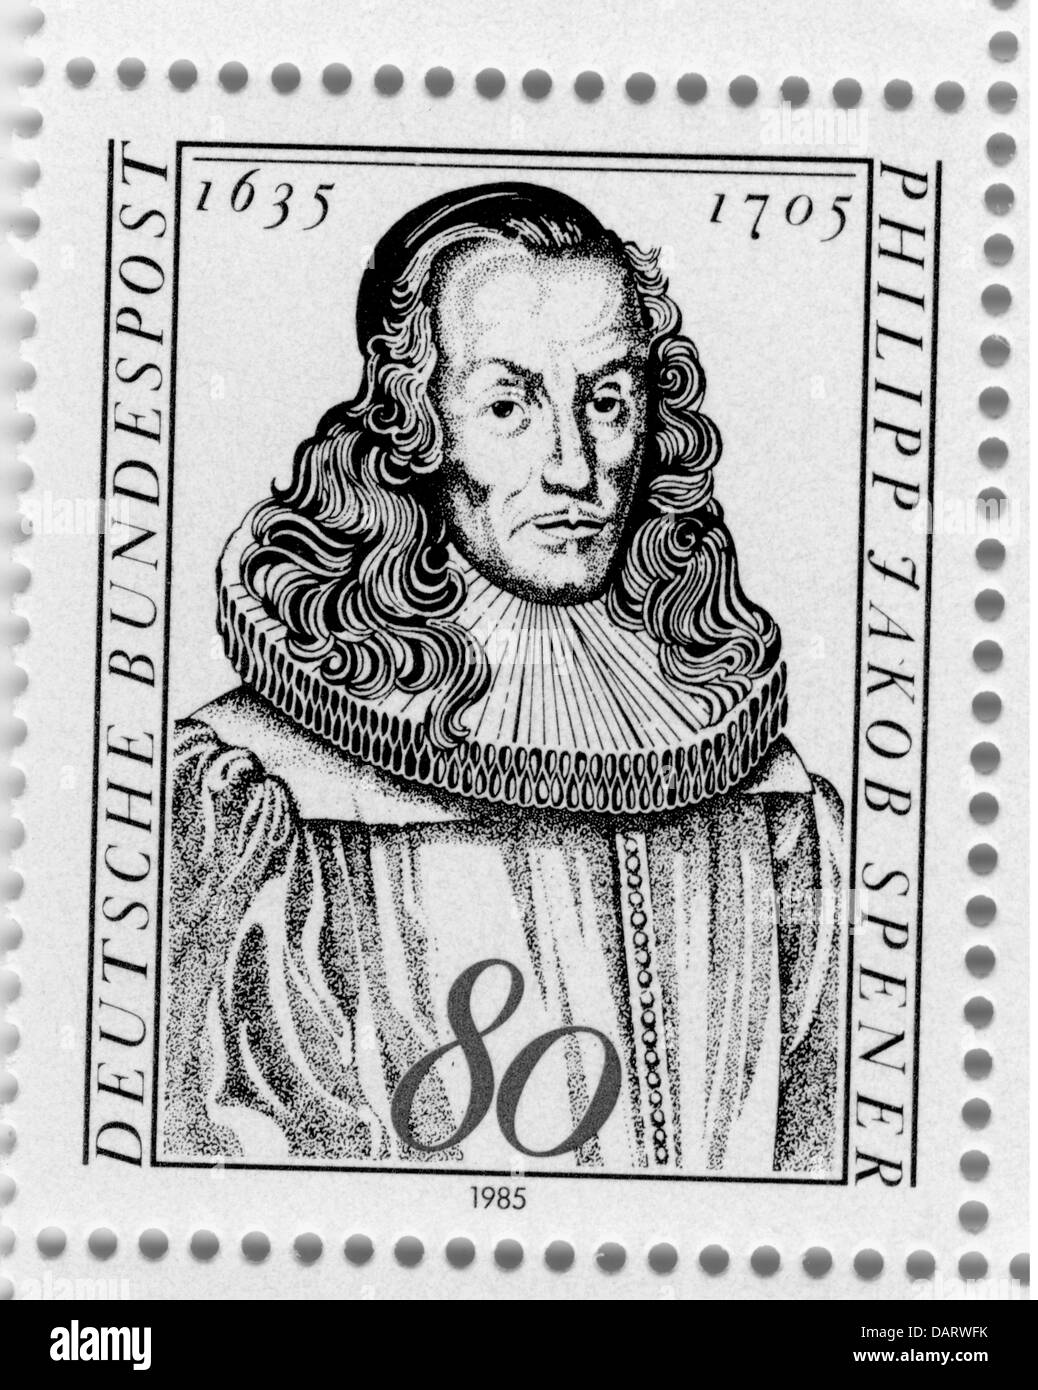 Spener, Philipp Jacob, 13.1.1635 - 5.2.1705, German clergyman (Lutheran), portrait, postage stamp, 20th century, Stock Photo